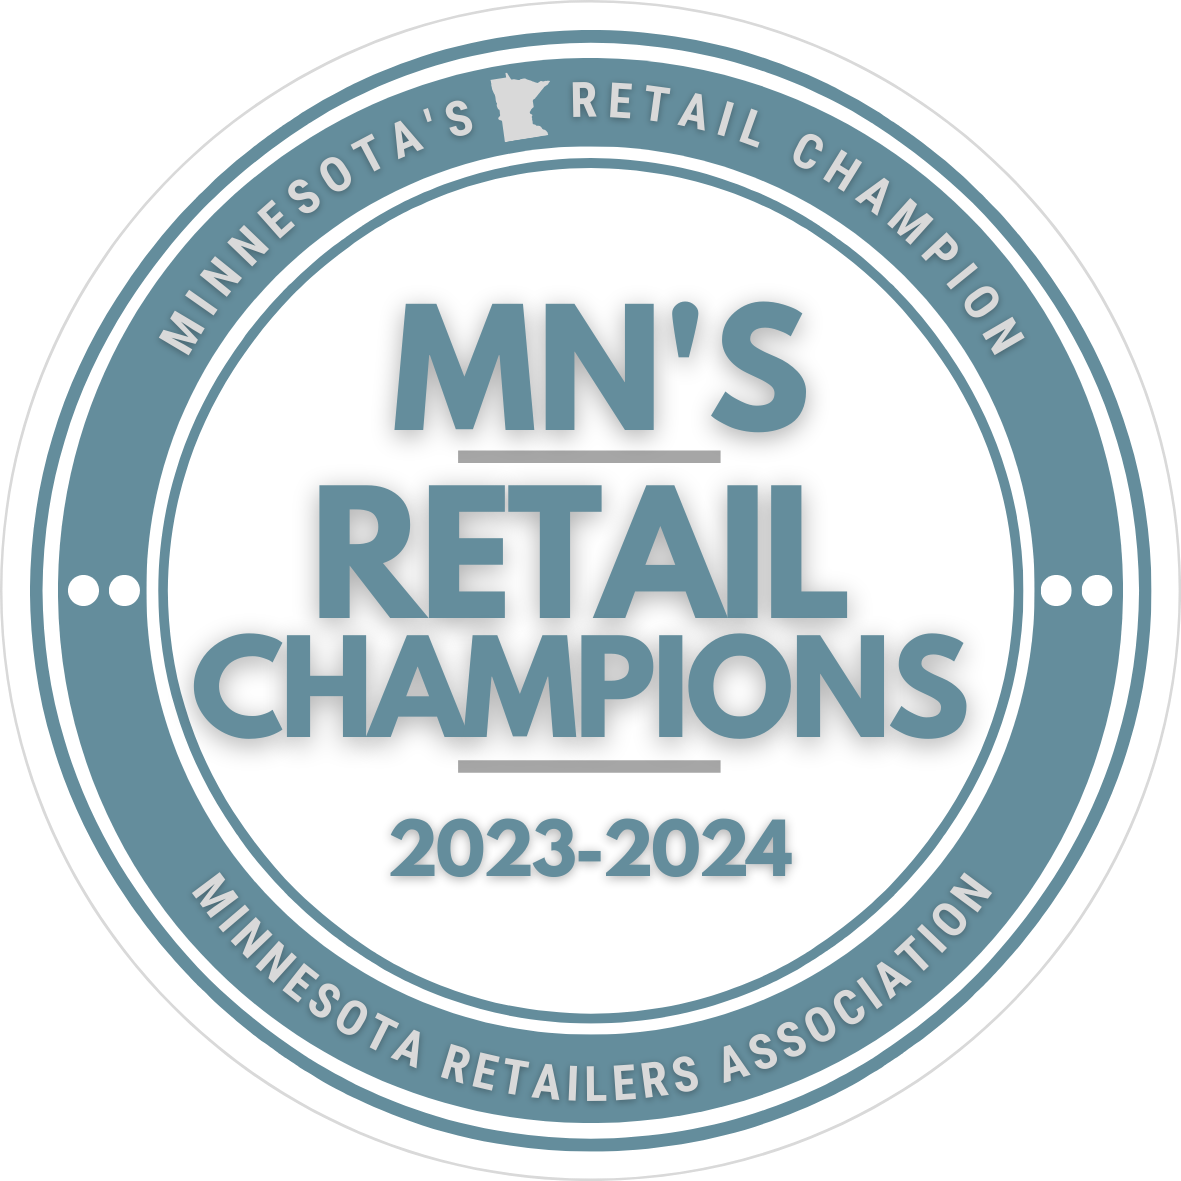 Retail Champions 2023 2024